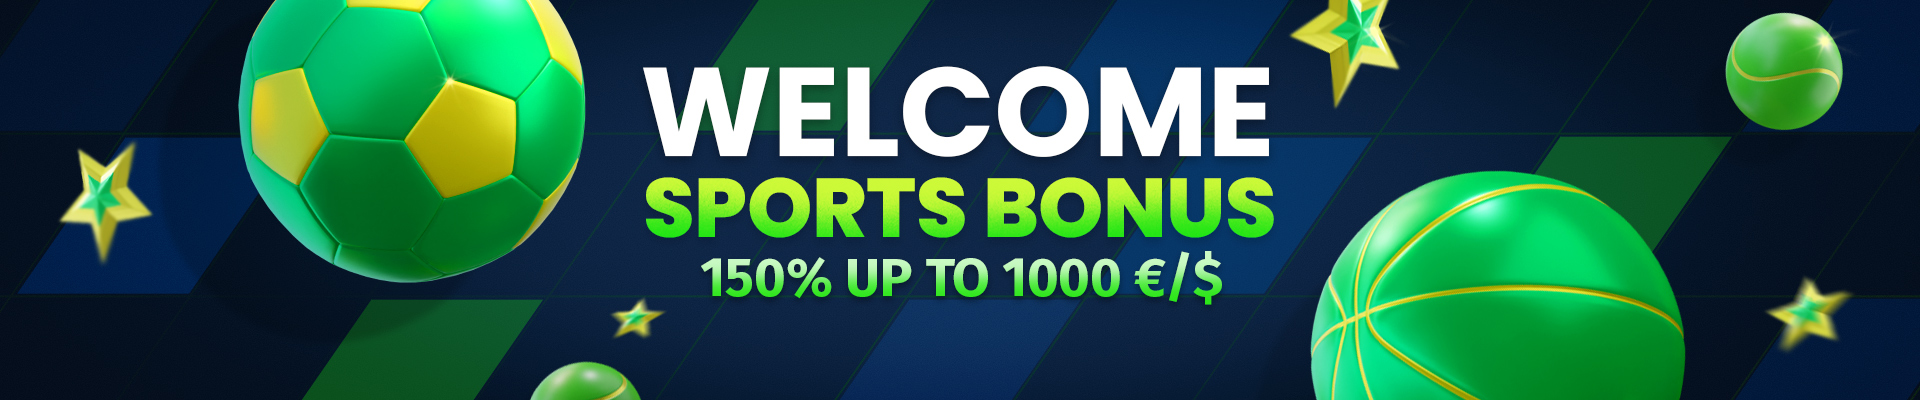 Velobet Sport Welcome Bonus